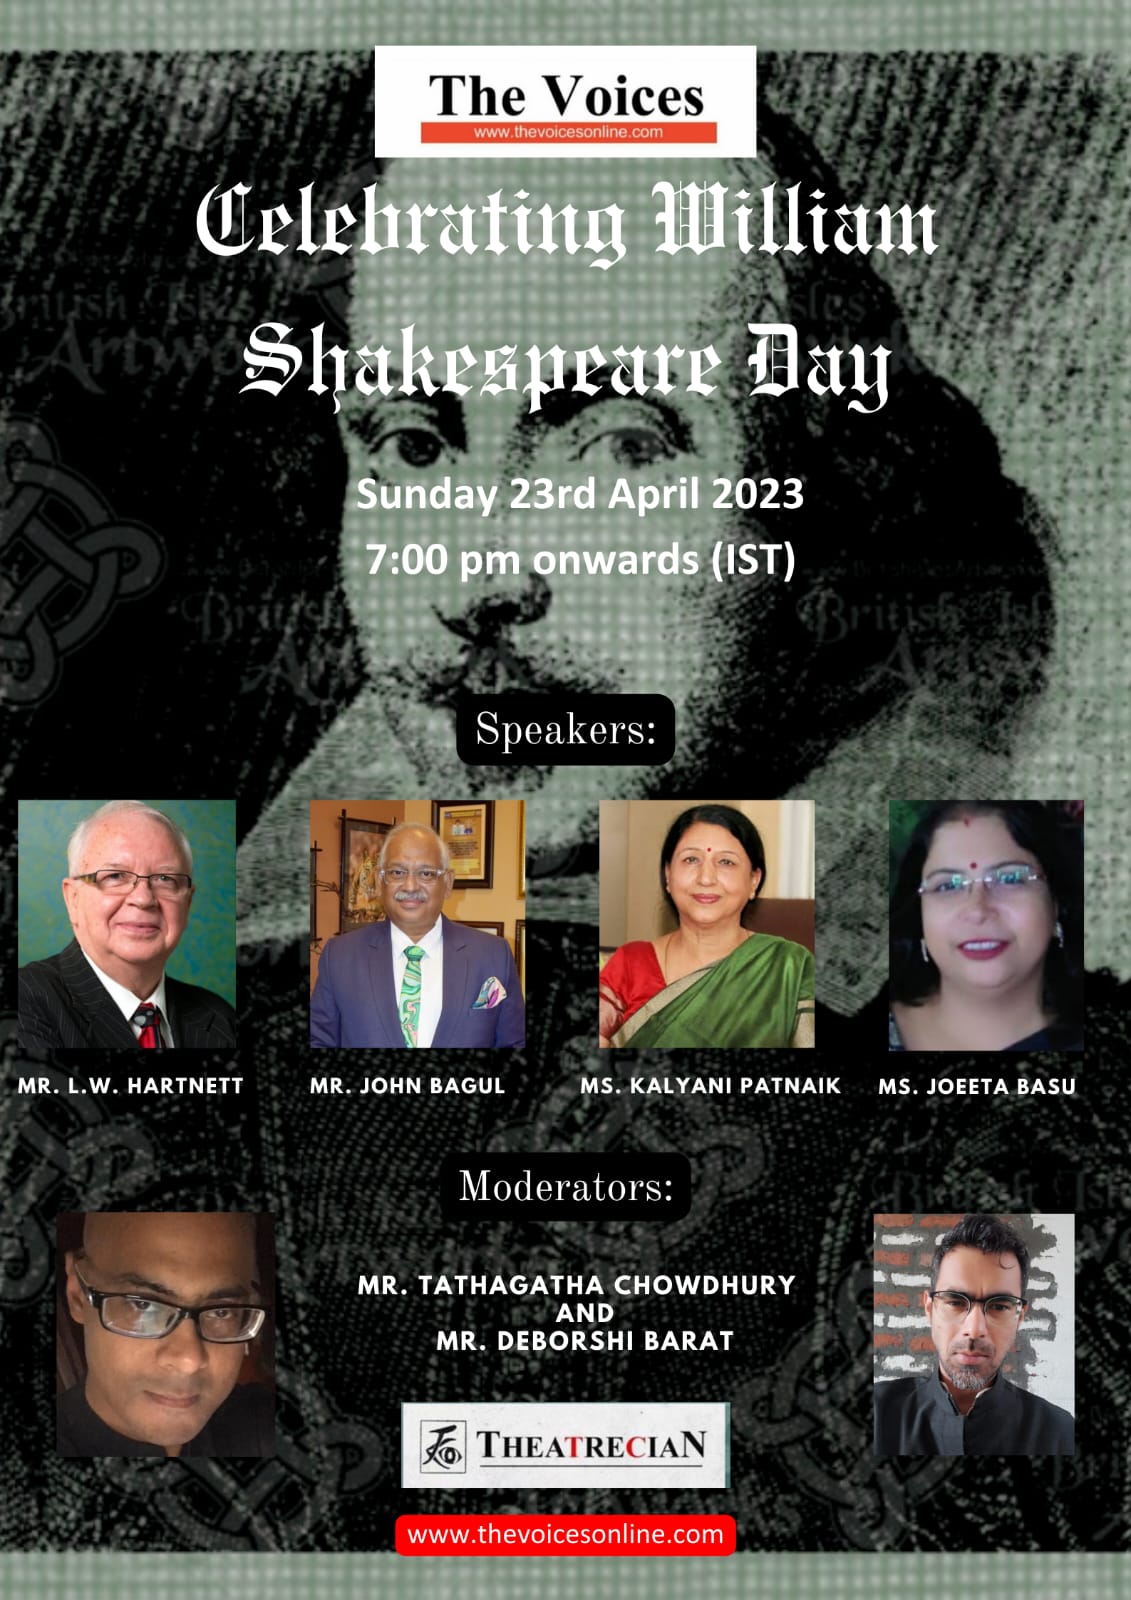 William Shakespeare Day